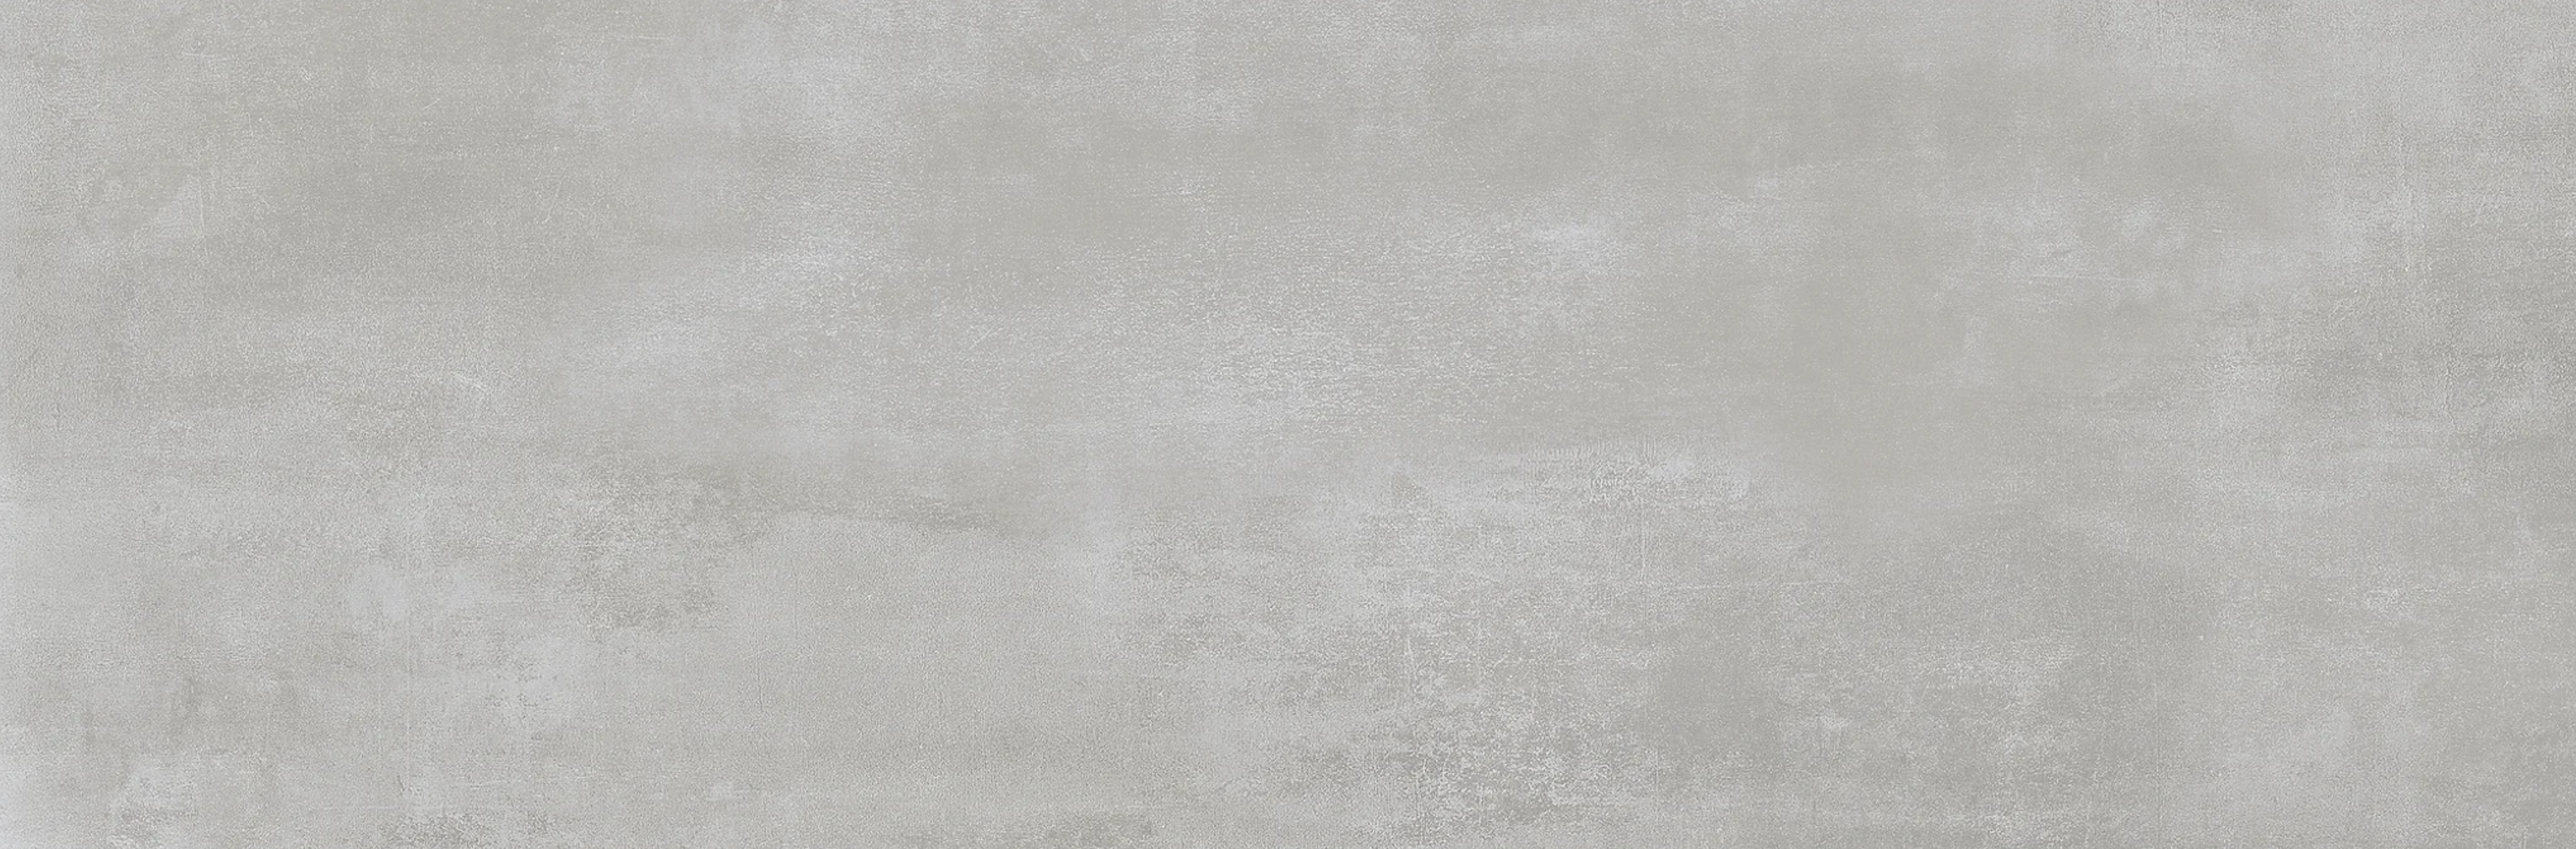 Rivestimento in bicottura pasta bianca Grey serie MorePlus by Paul Ceramiche